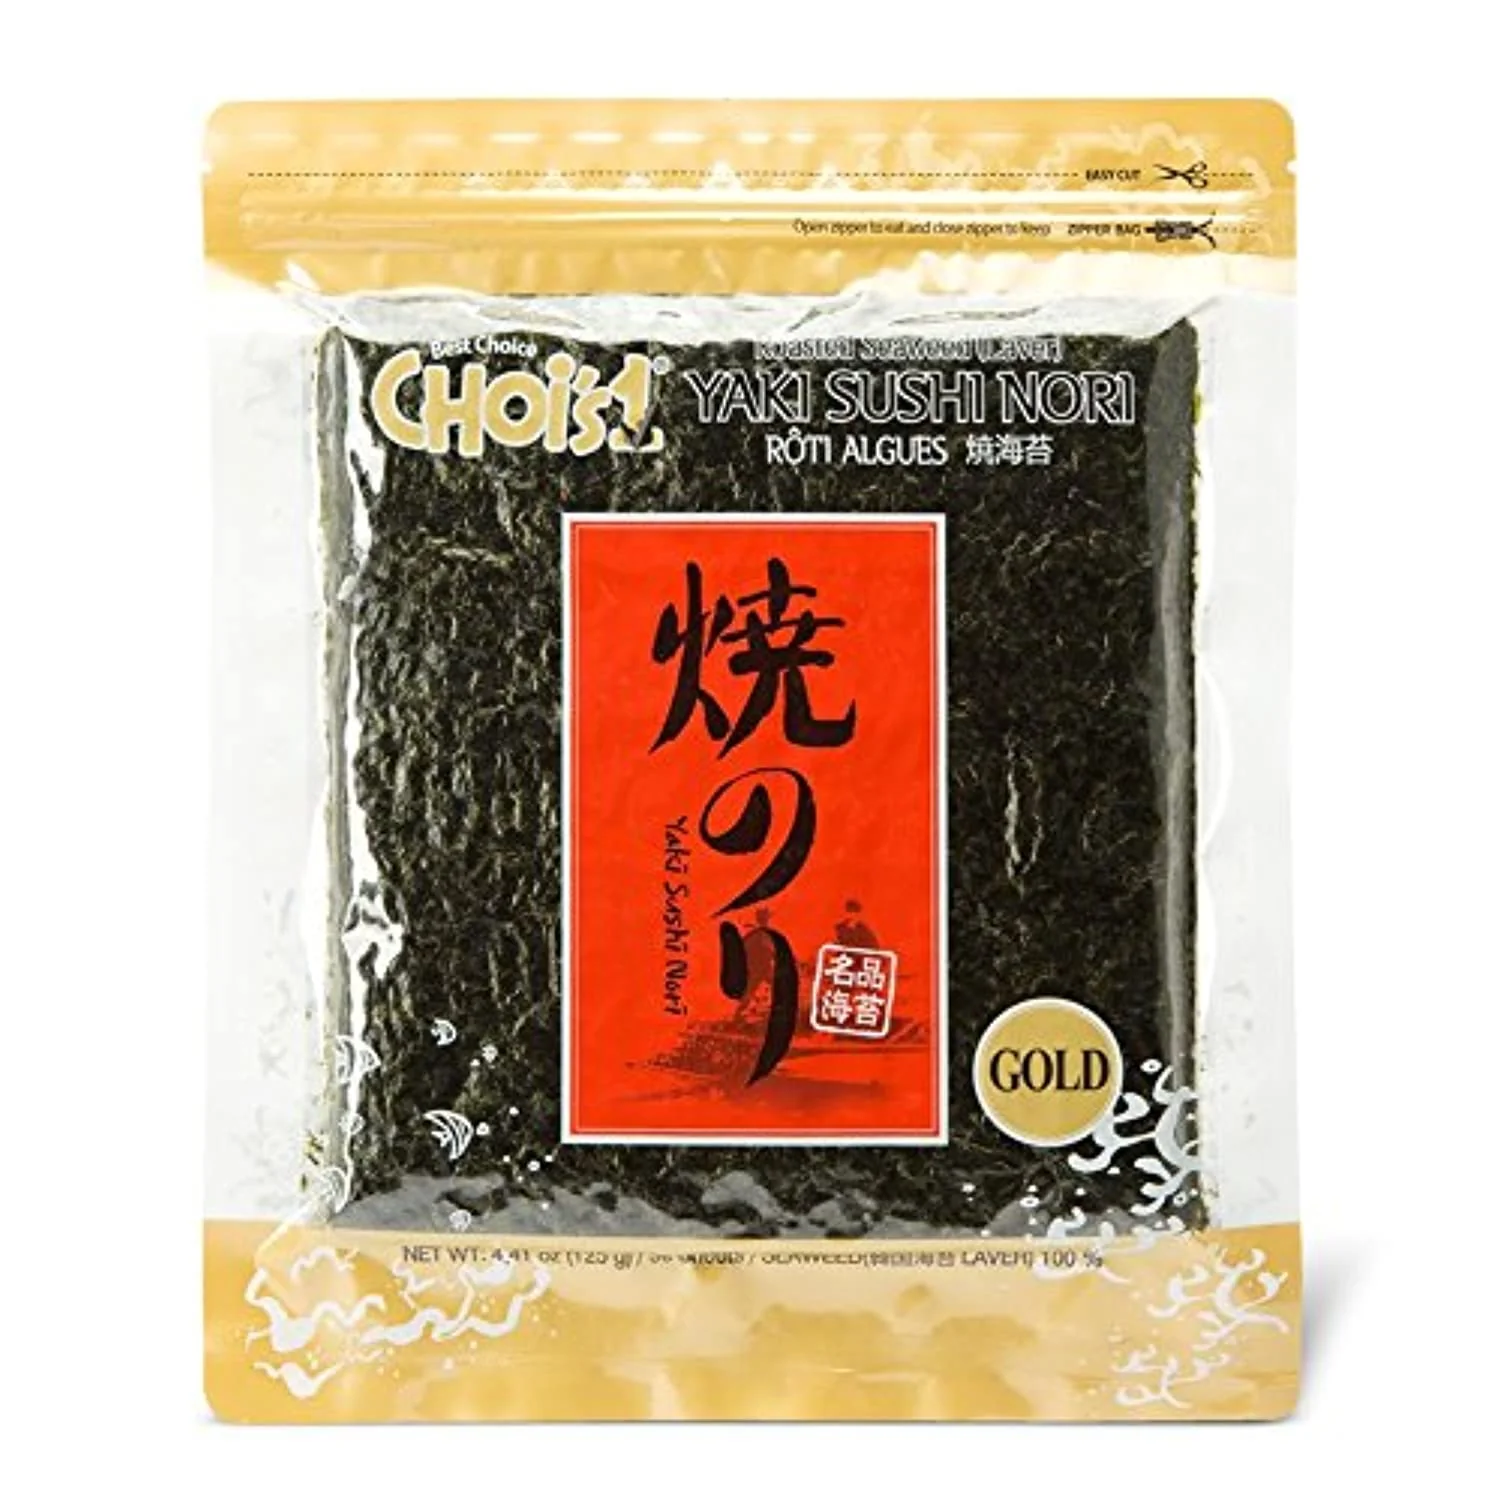 DAECHUN Sushi Nori Seaweed Gold Grade 50 Sheets